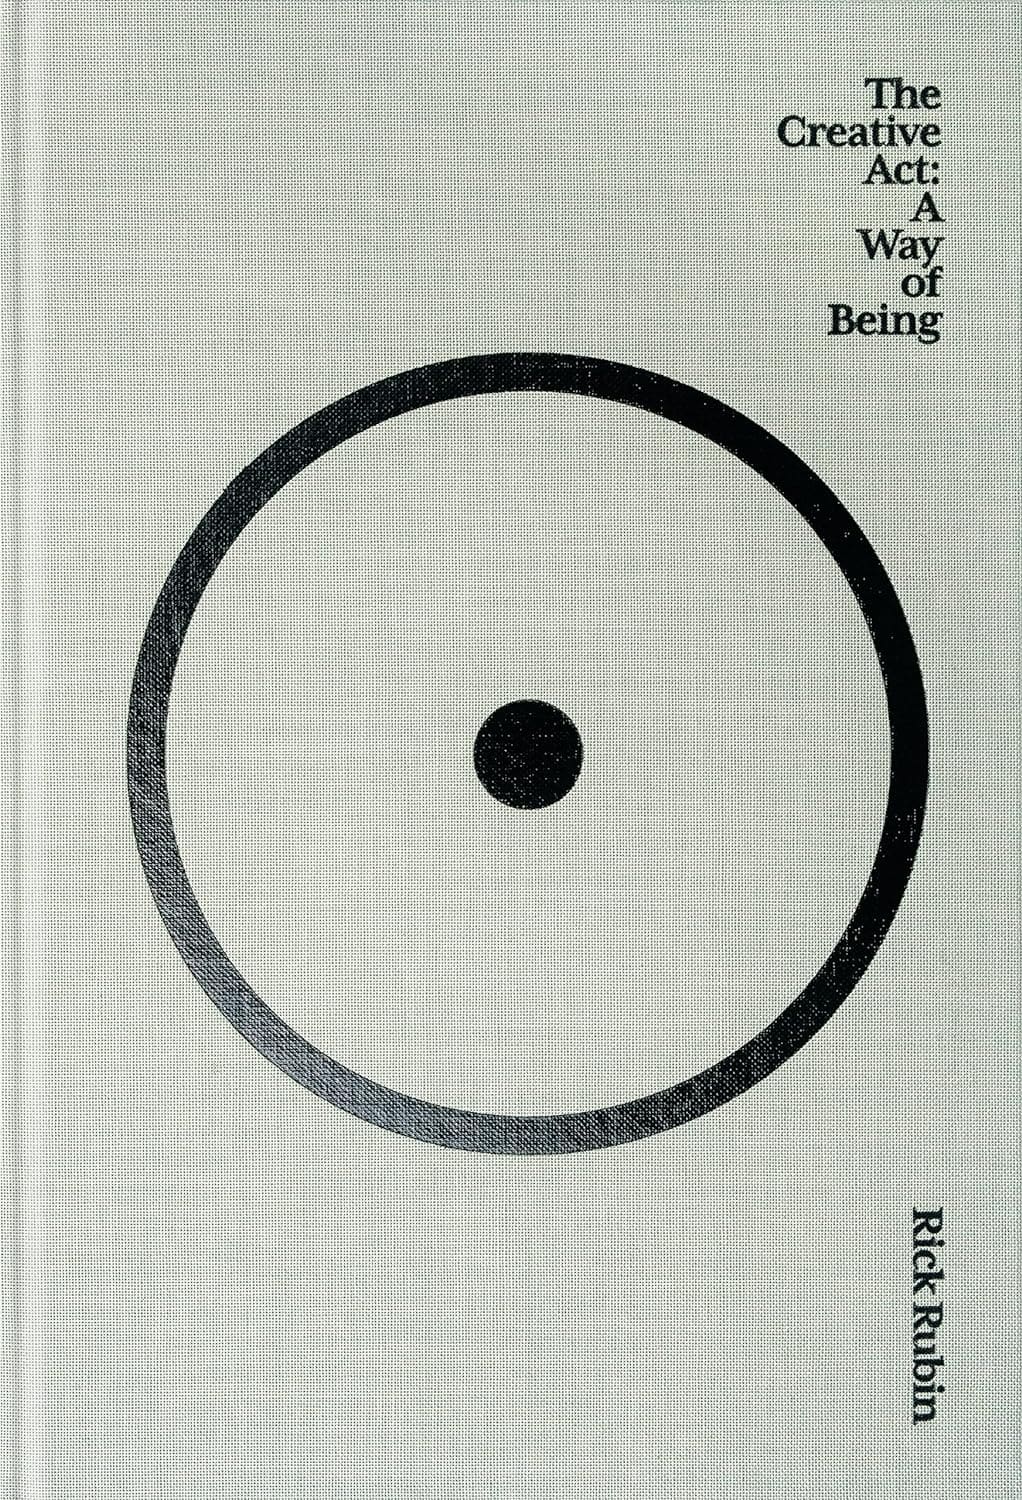 The Creative Act Book By Rick Rubin